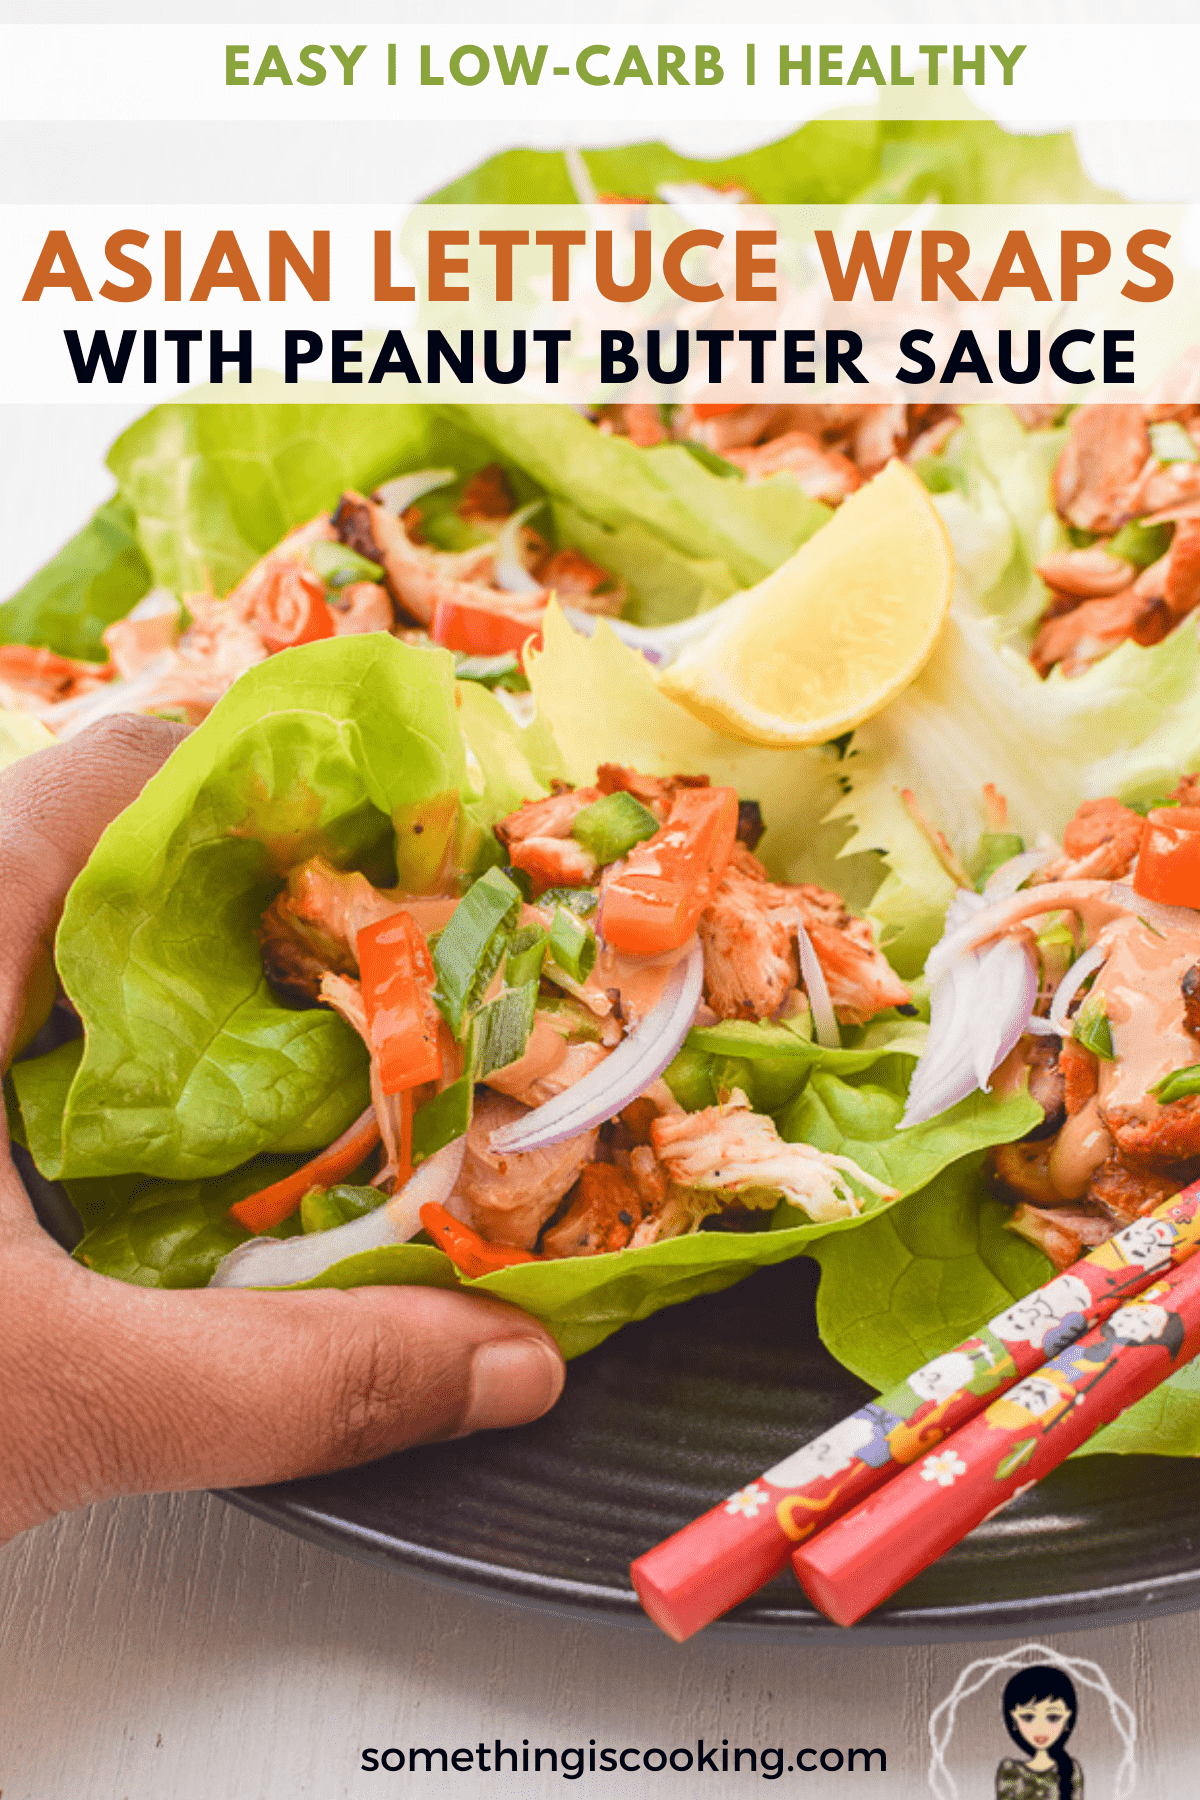 Asian Lettuce Wraps with Peanut Butter Sauce